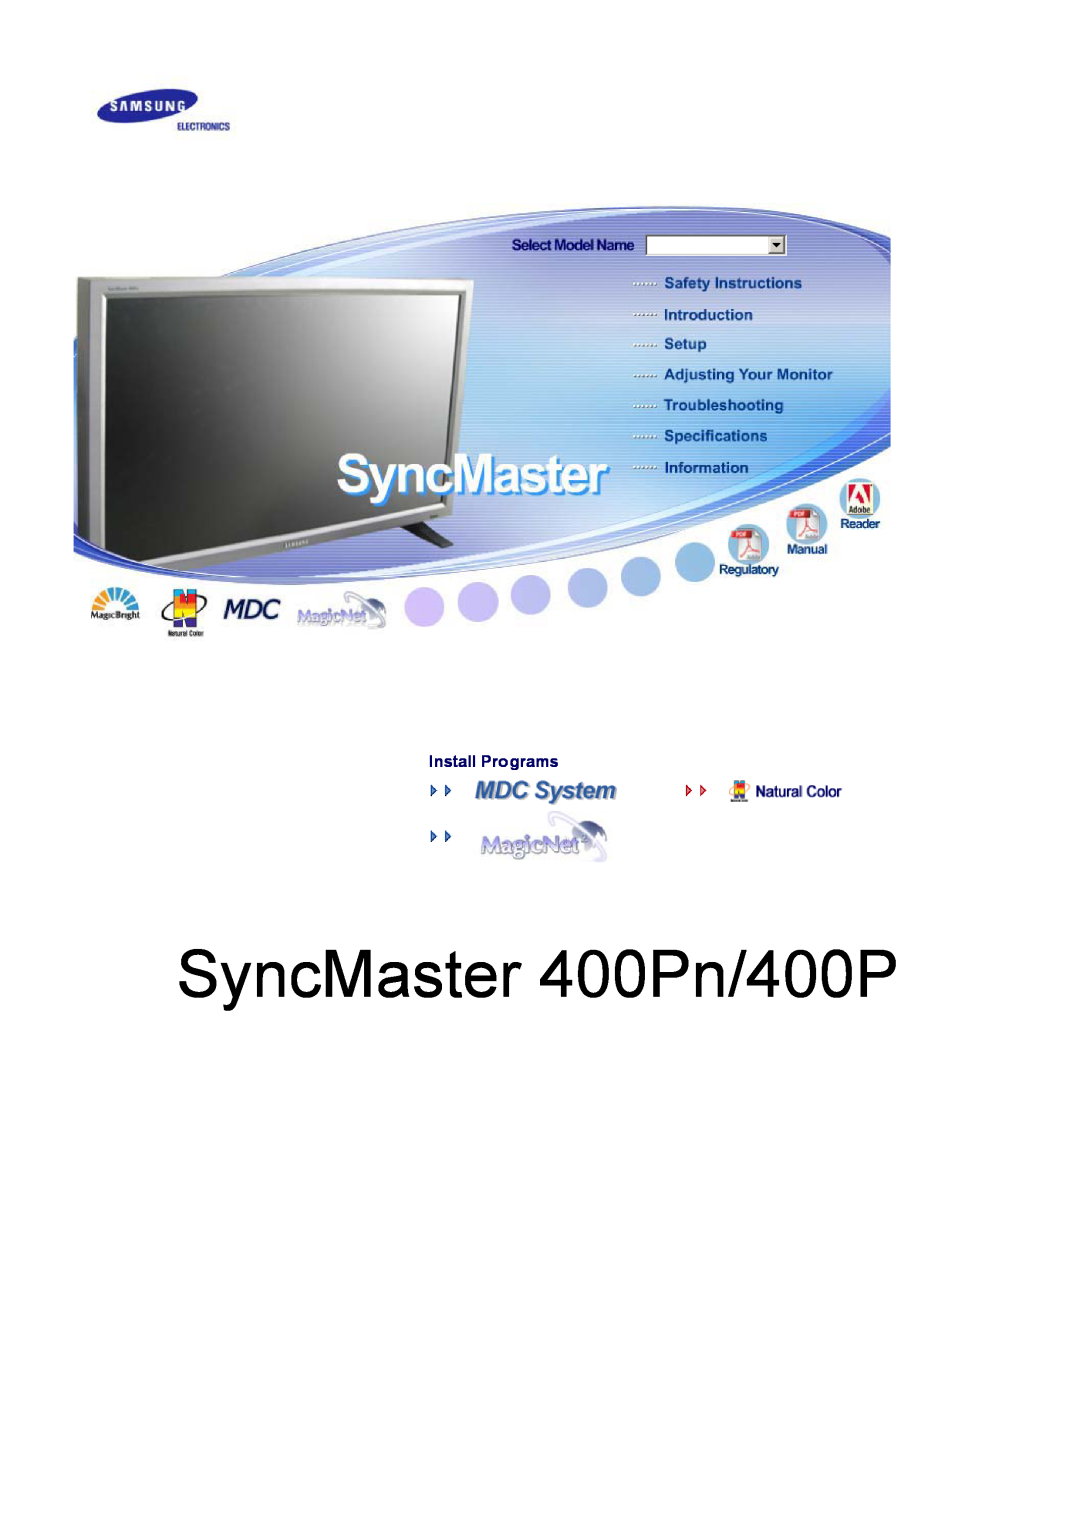 Samsung 400Pn, 400P manual SyncMaster 400Pn/400P, Install Programs 